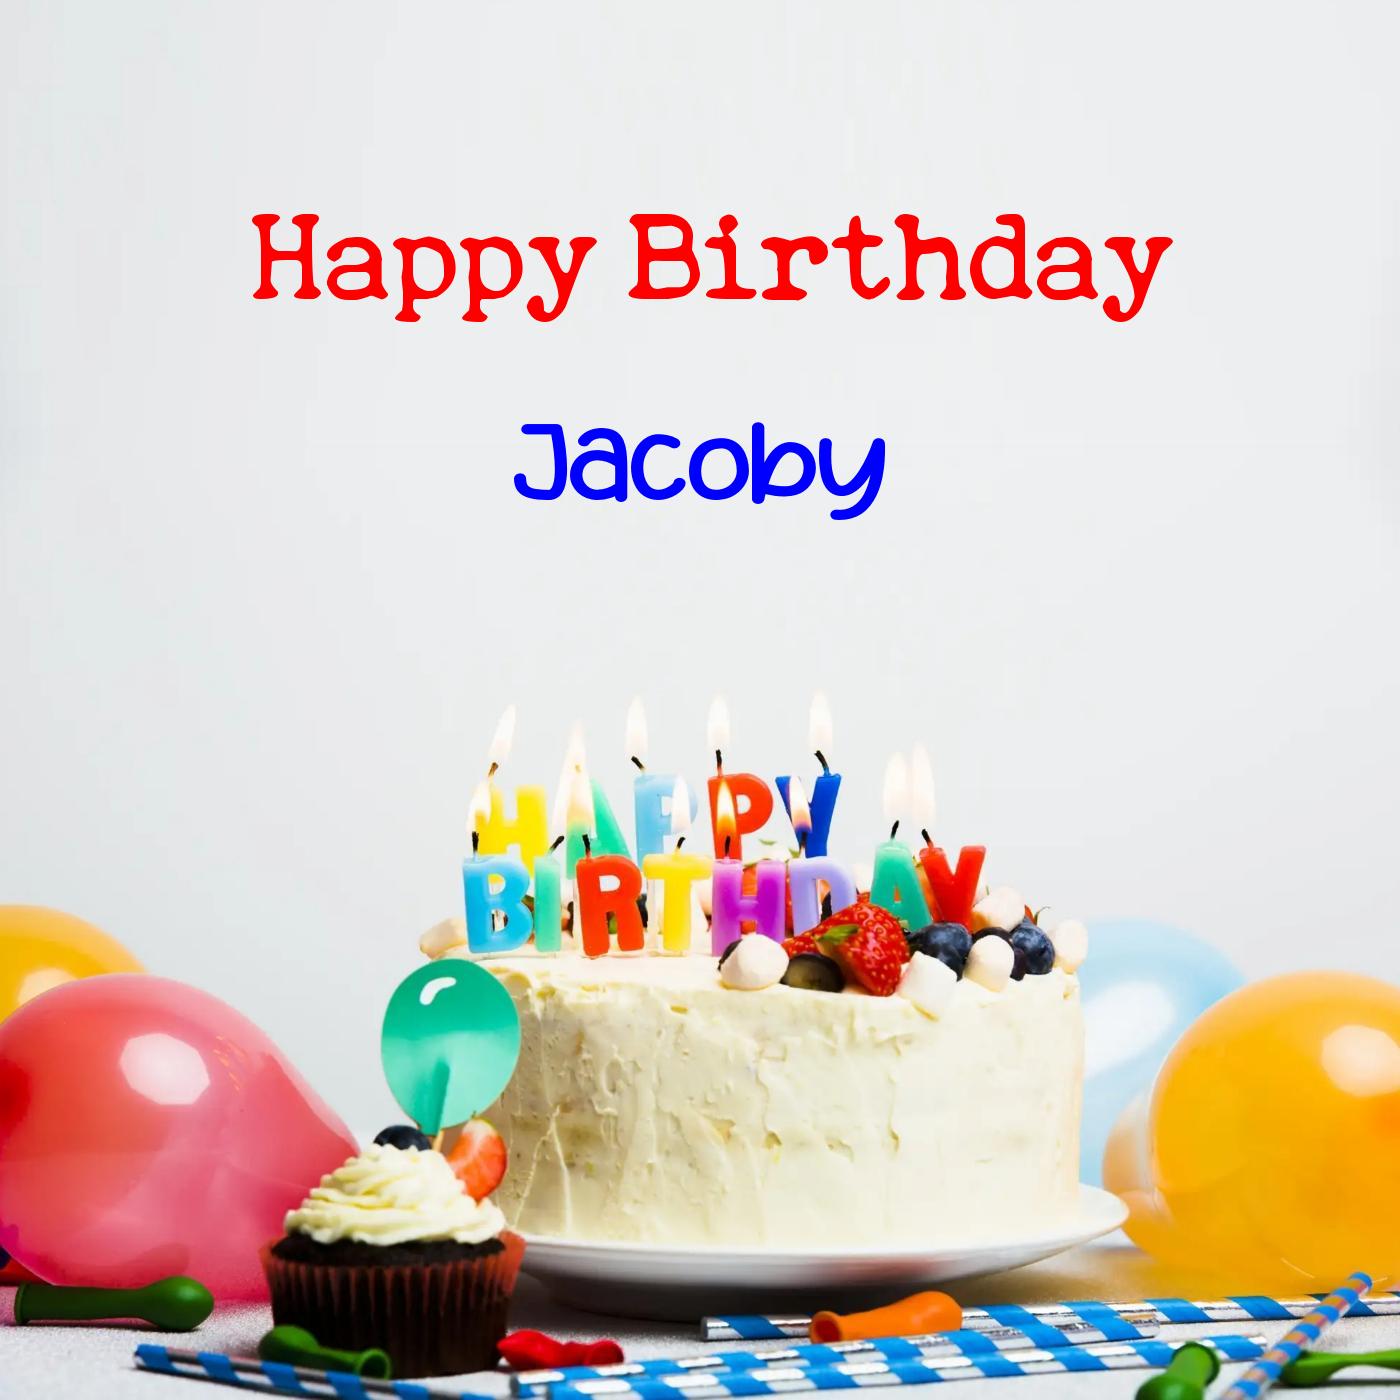 Happy Birthday Jacoby Cake Balloons Card